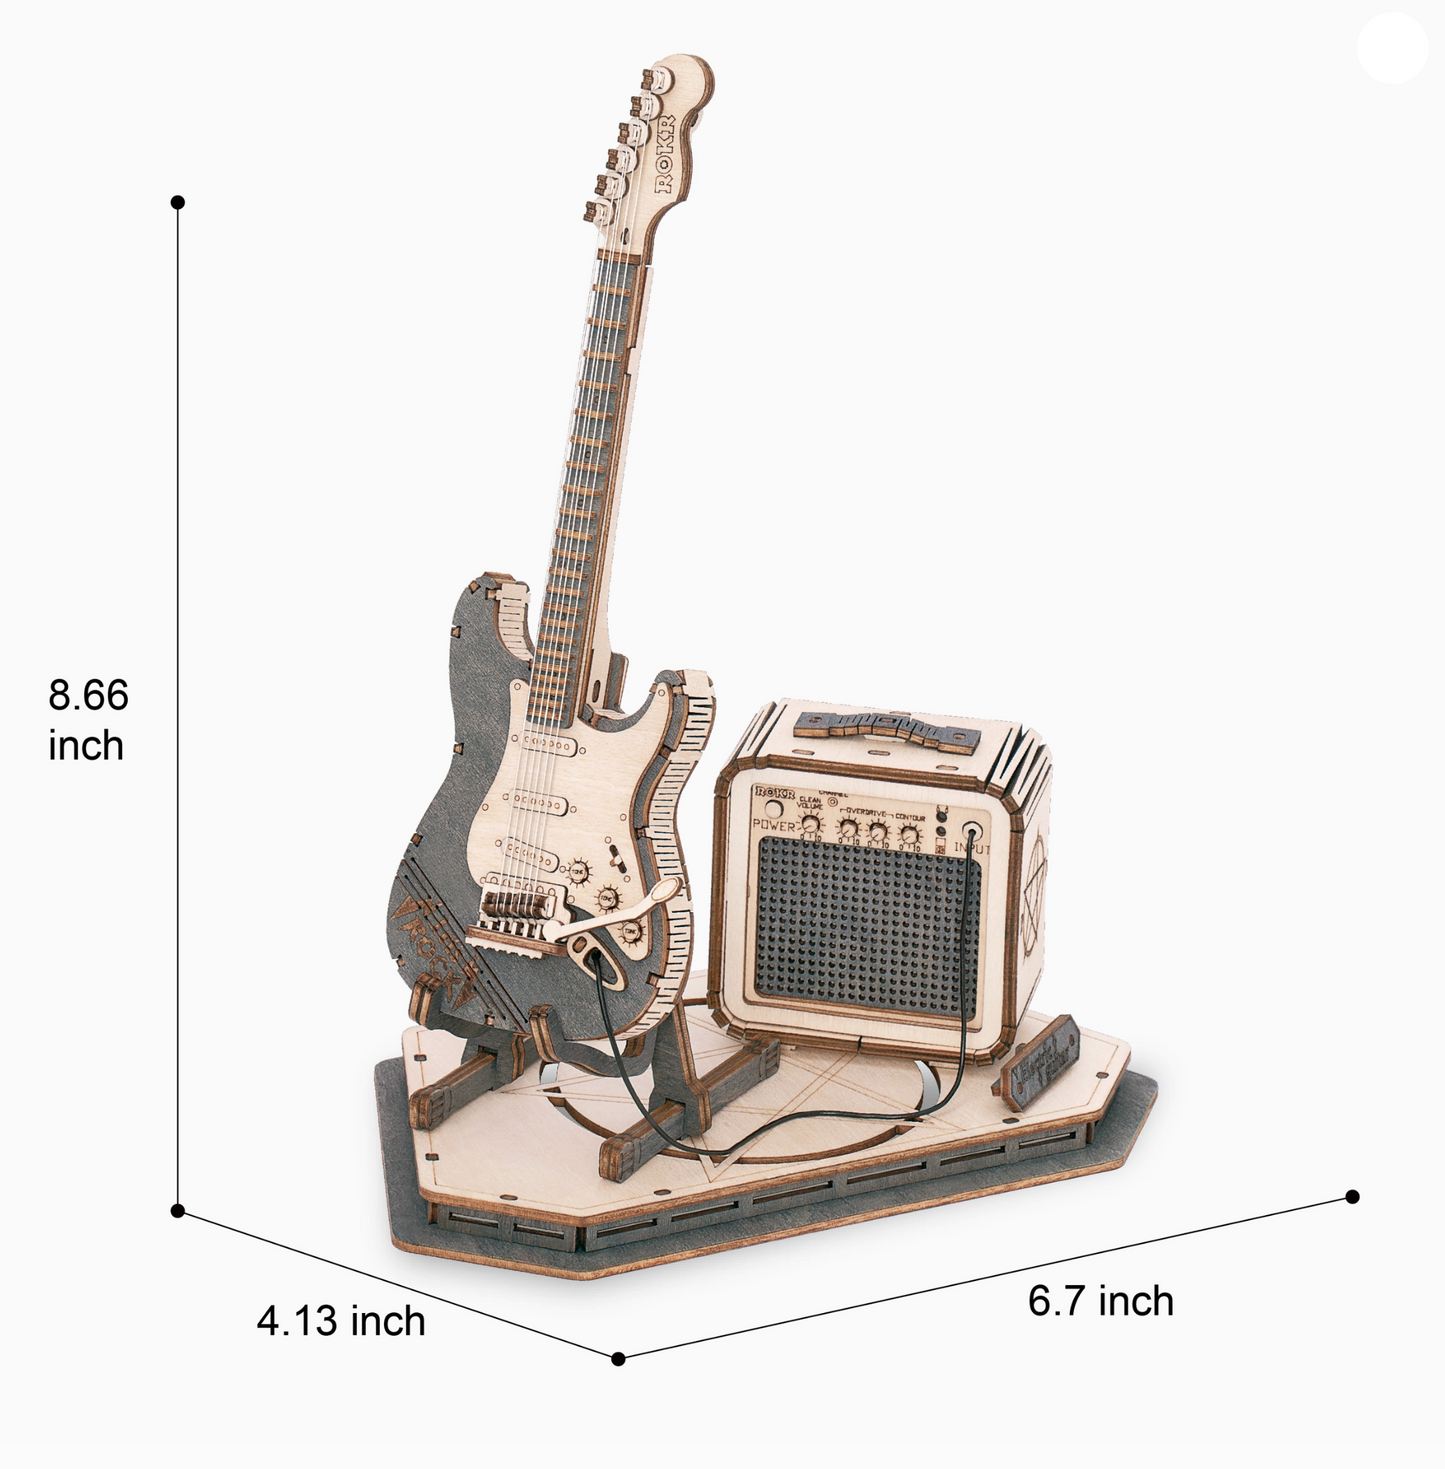 3D Wooden Puzzle - Electric Guitar